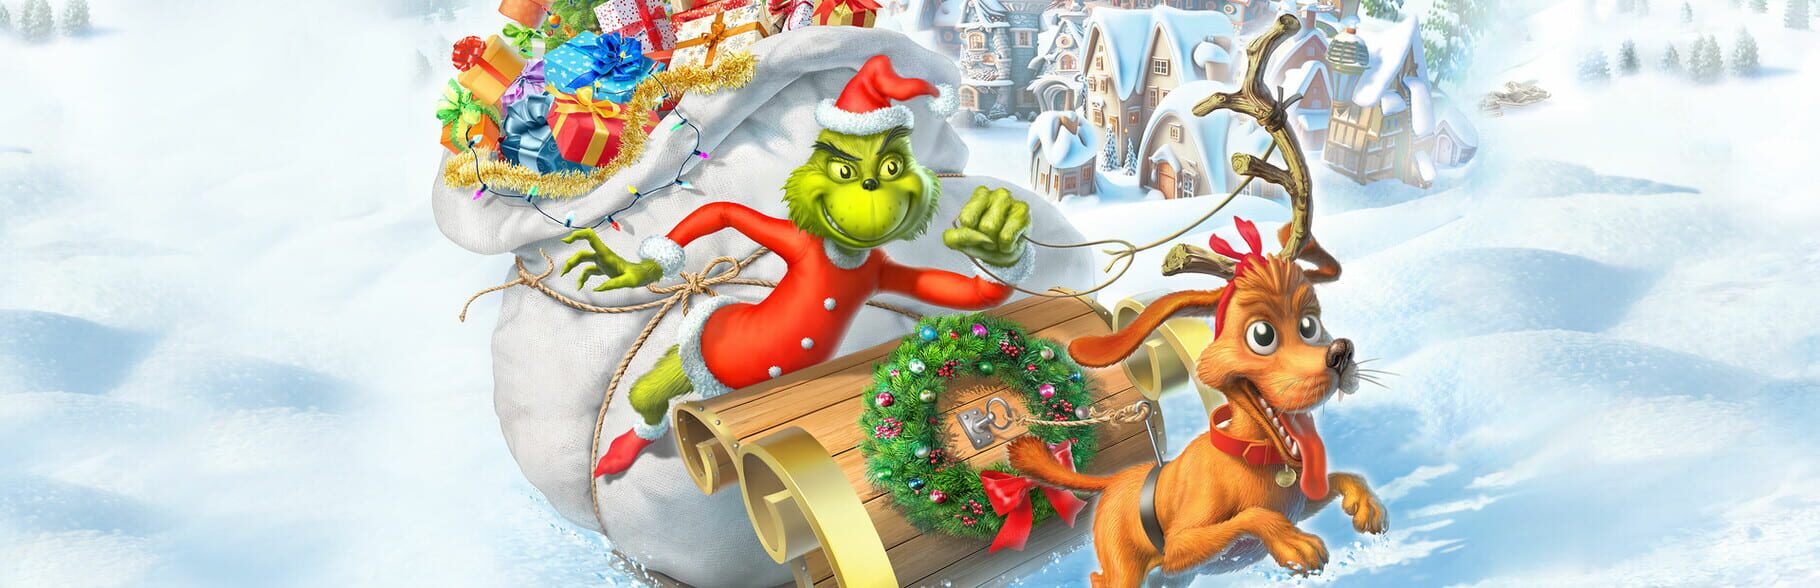 Arte - The Grinch: Christmas Adventures